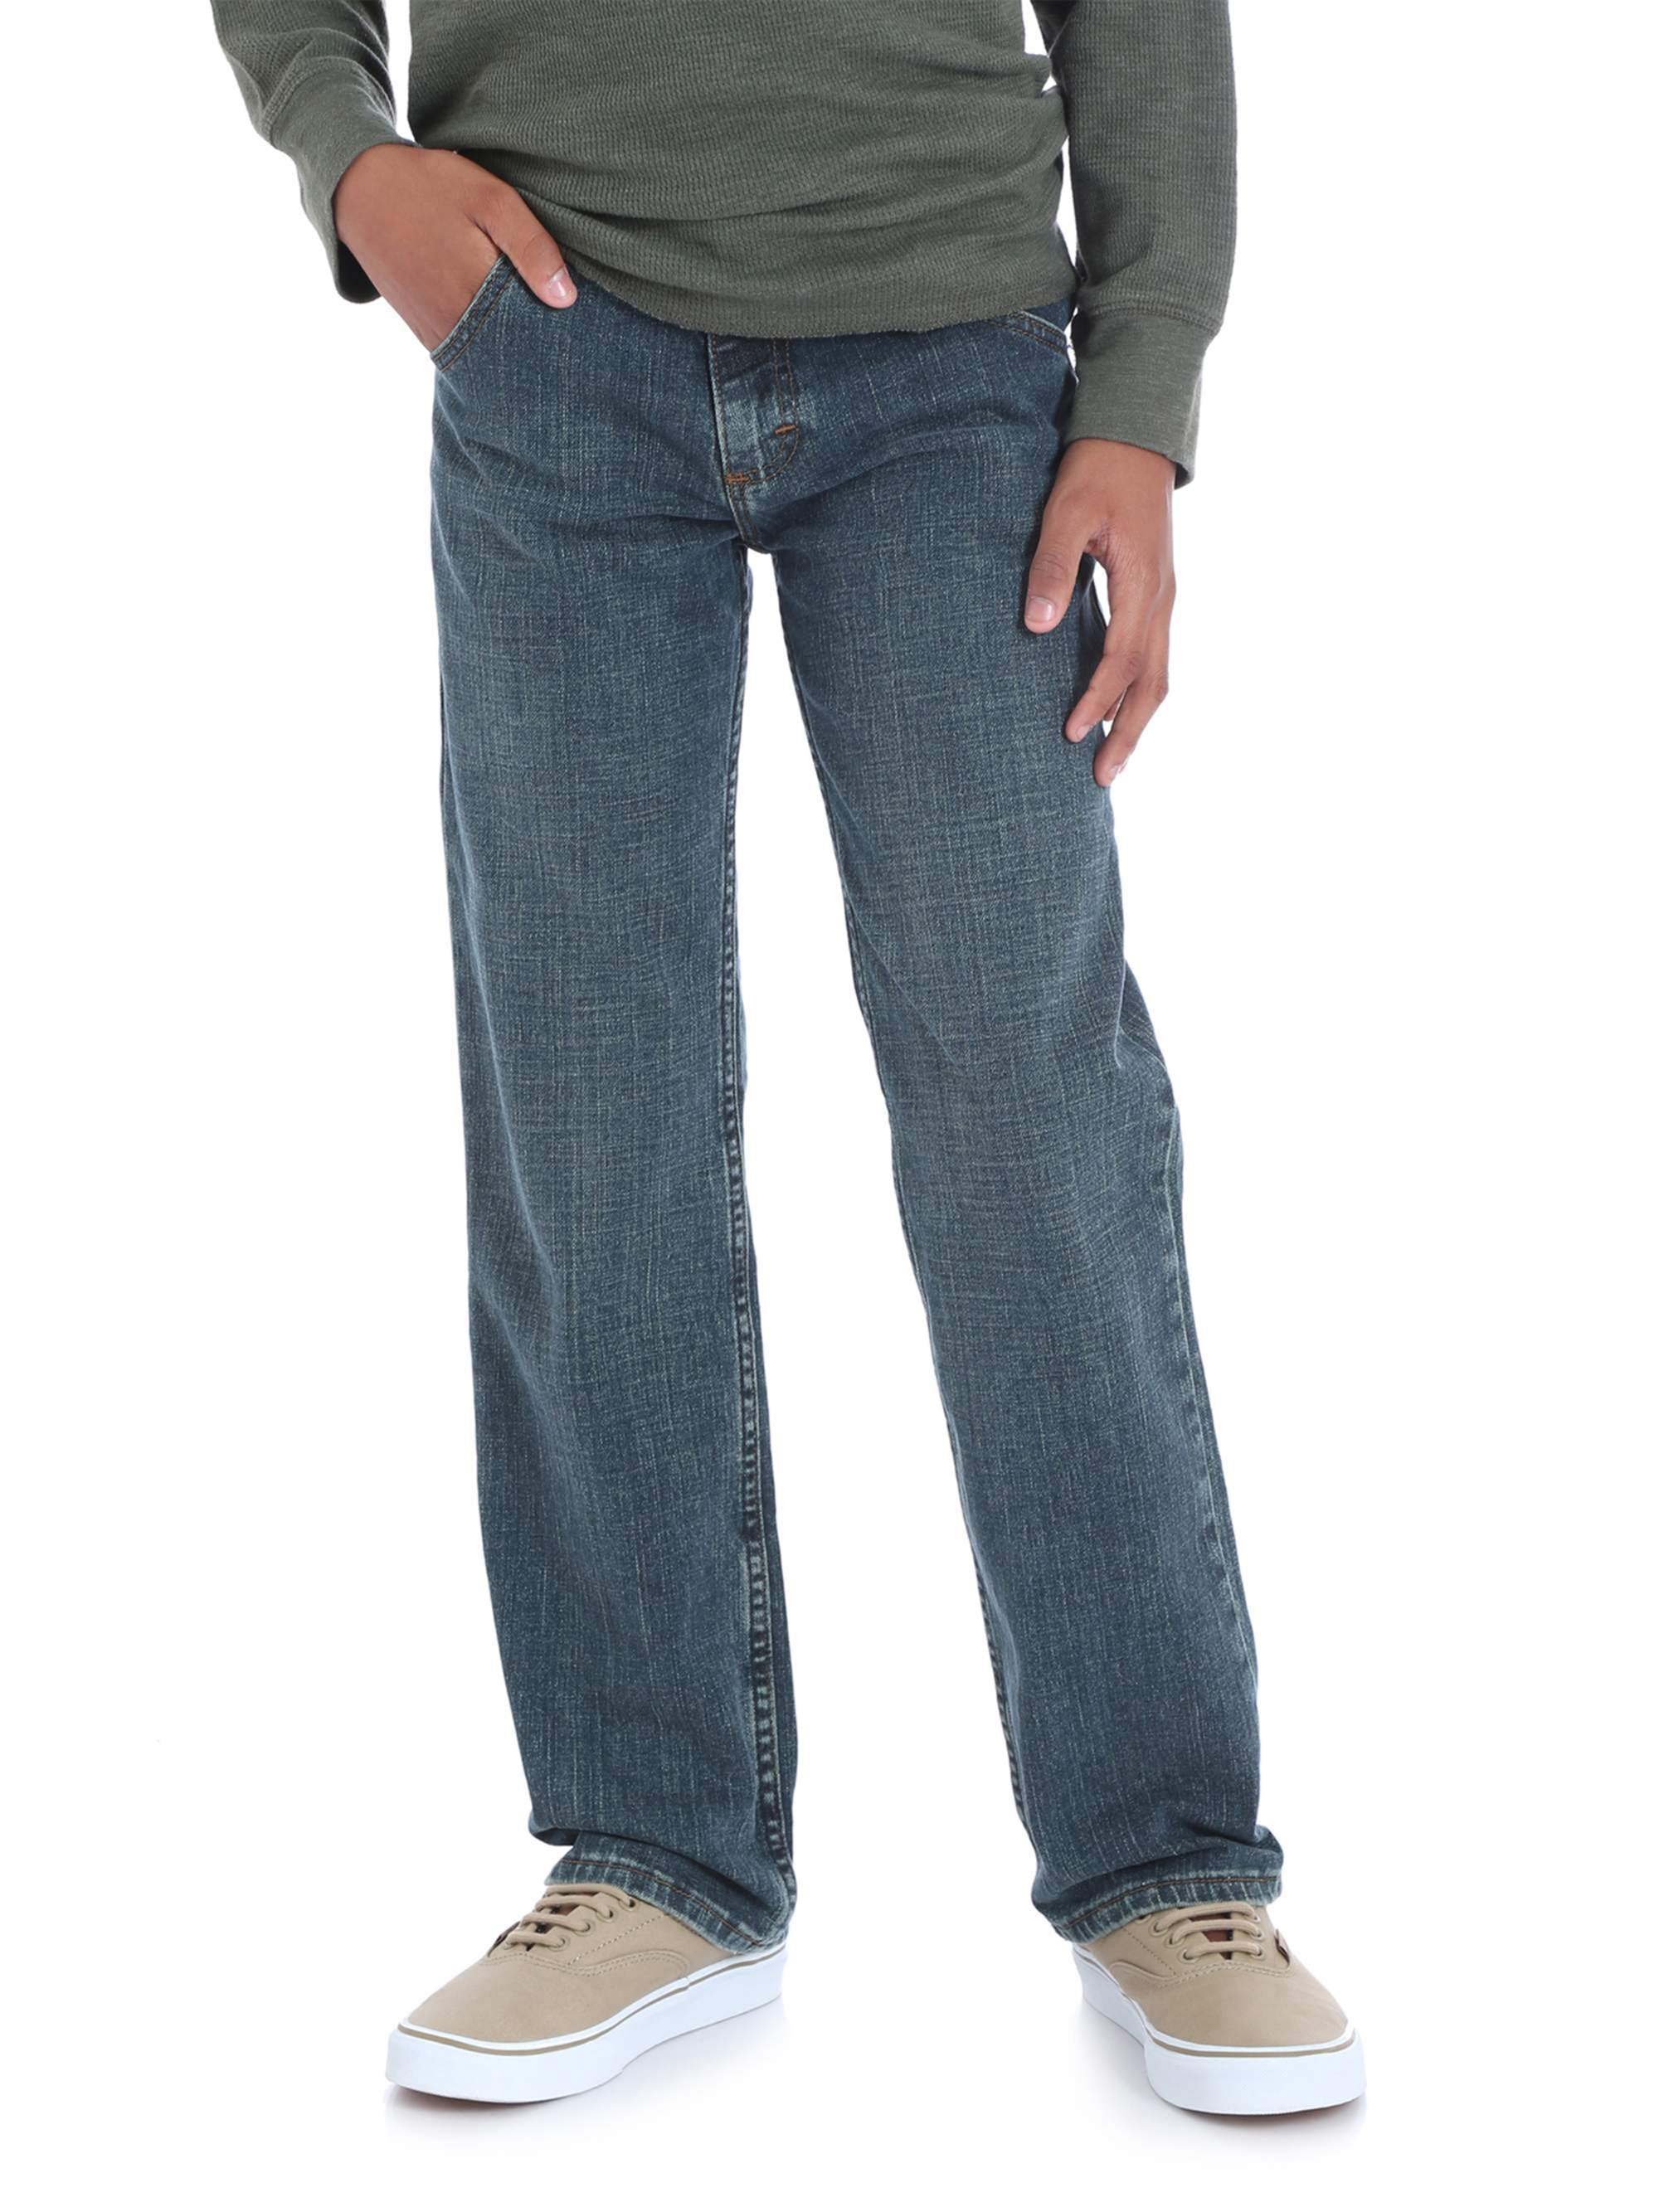 wrangler flex jeans walmart